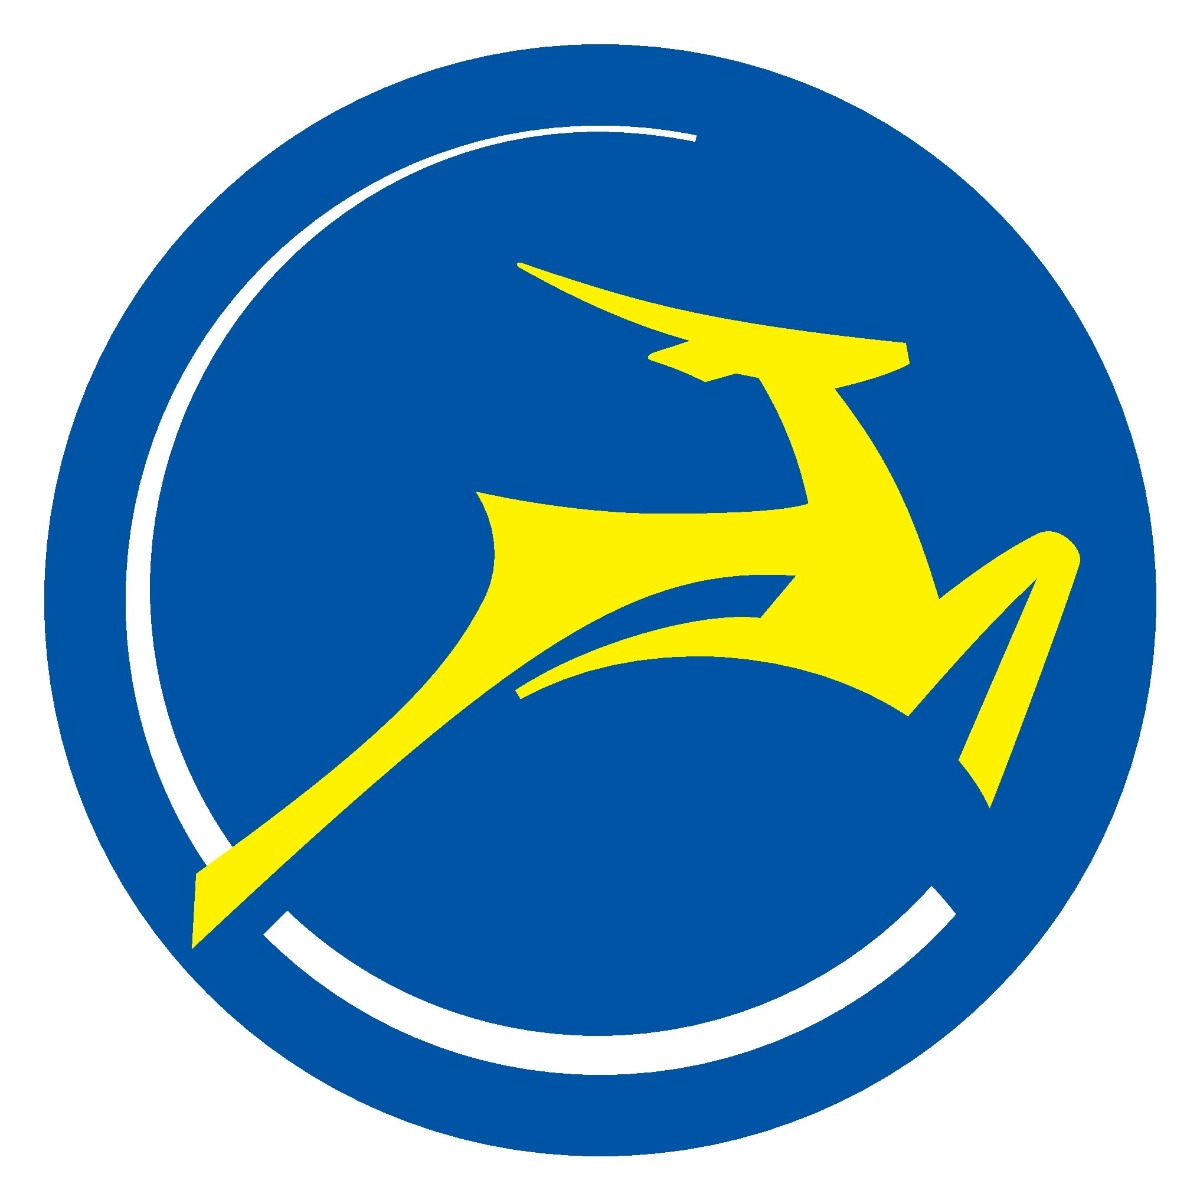 Logo der Fahrradmarke Gazelle.